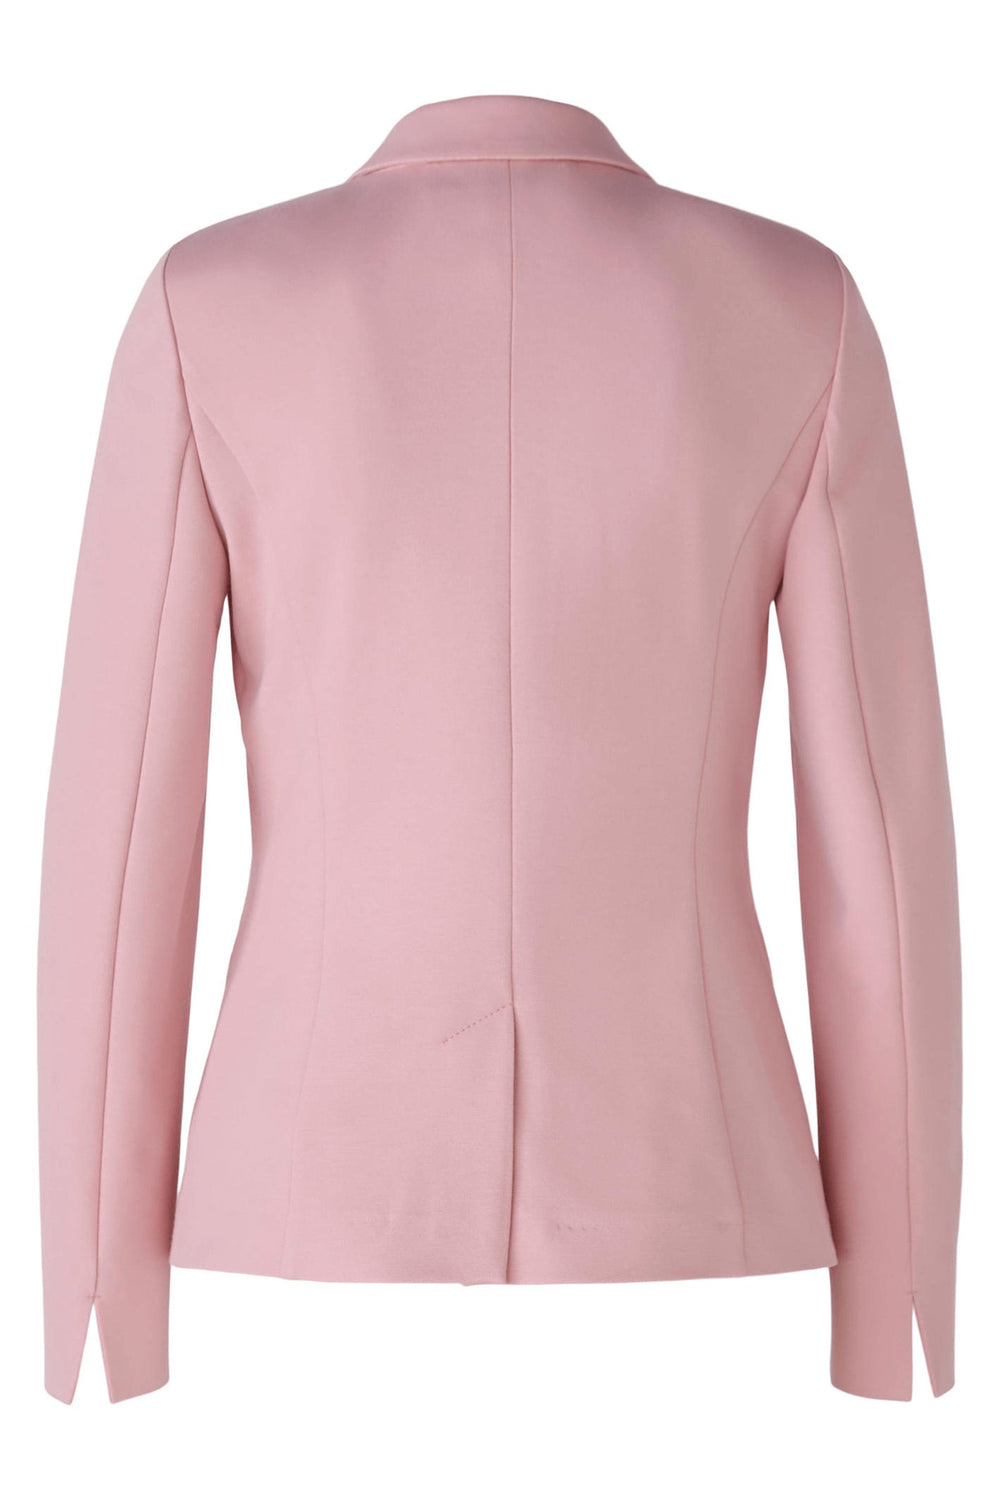 Oui 79237 Rose Pink Two Button Blazer Jacket - Olivia Grace Fashion